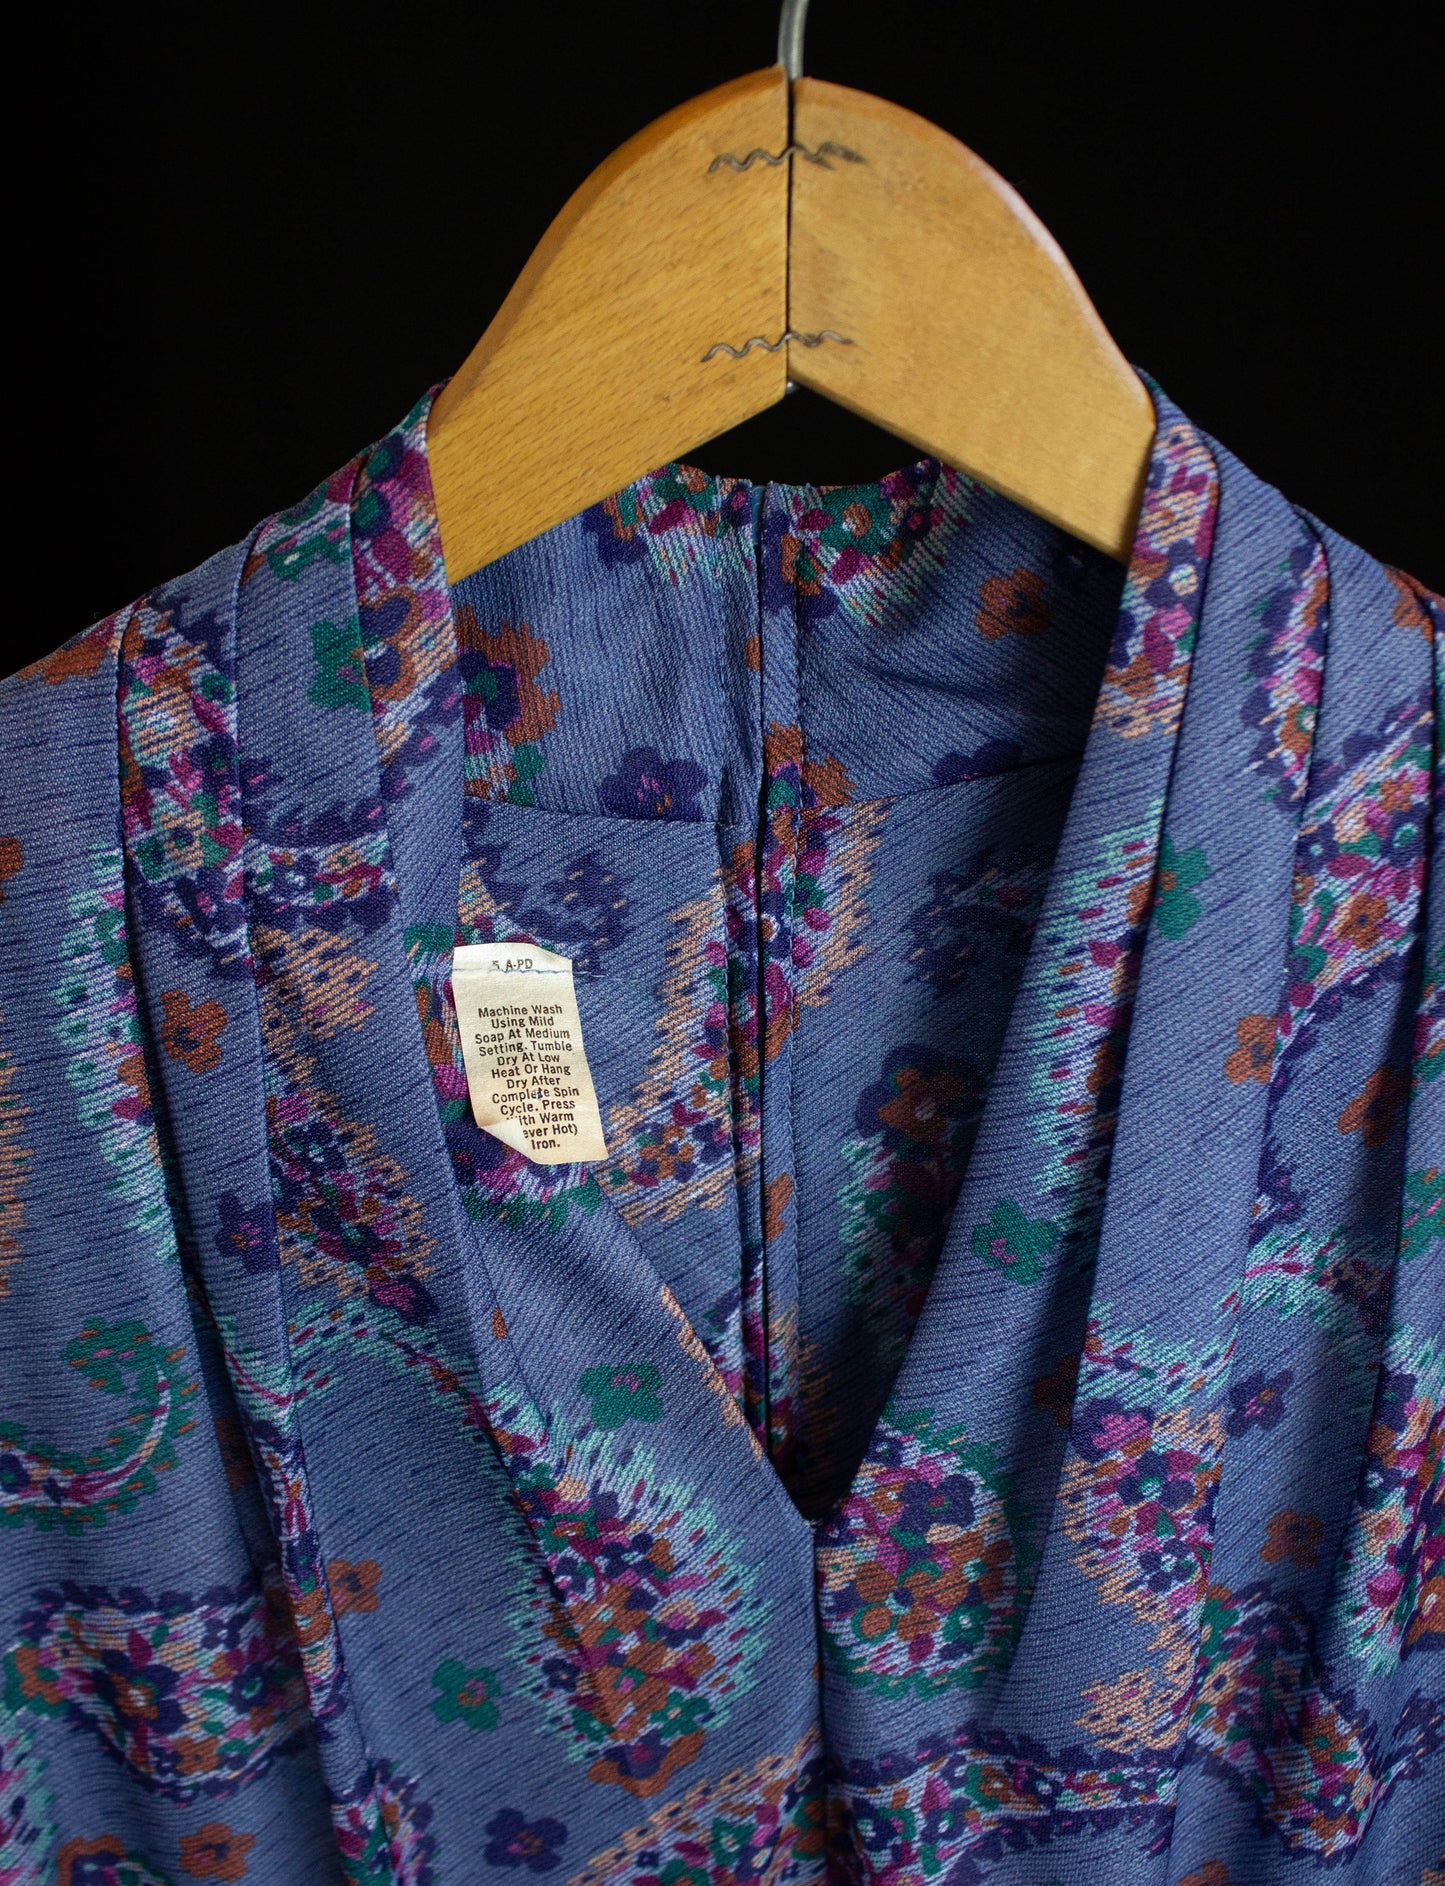 Vintage Paisley Print Maxi Dress 70s Blue and Purple Small-Medium